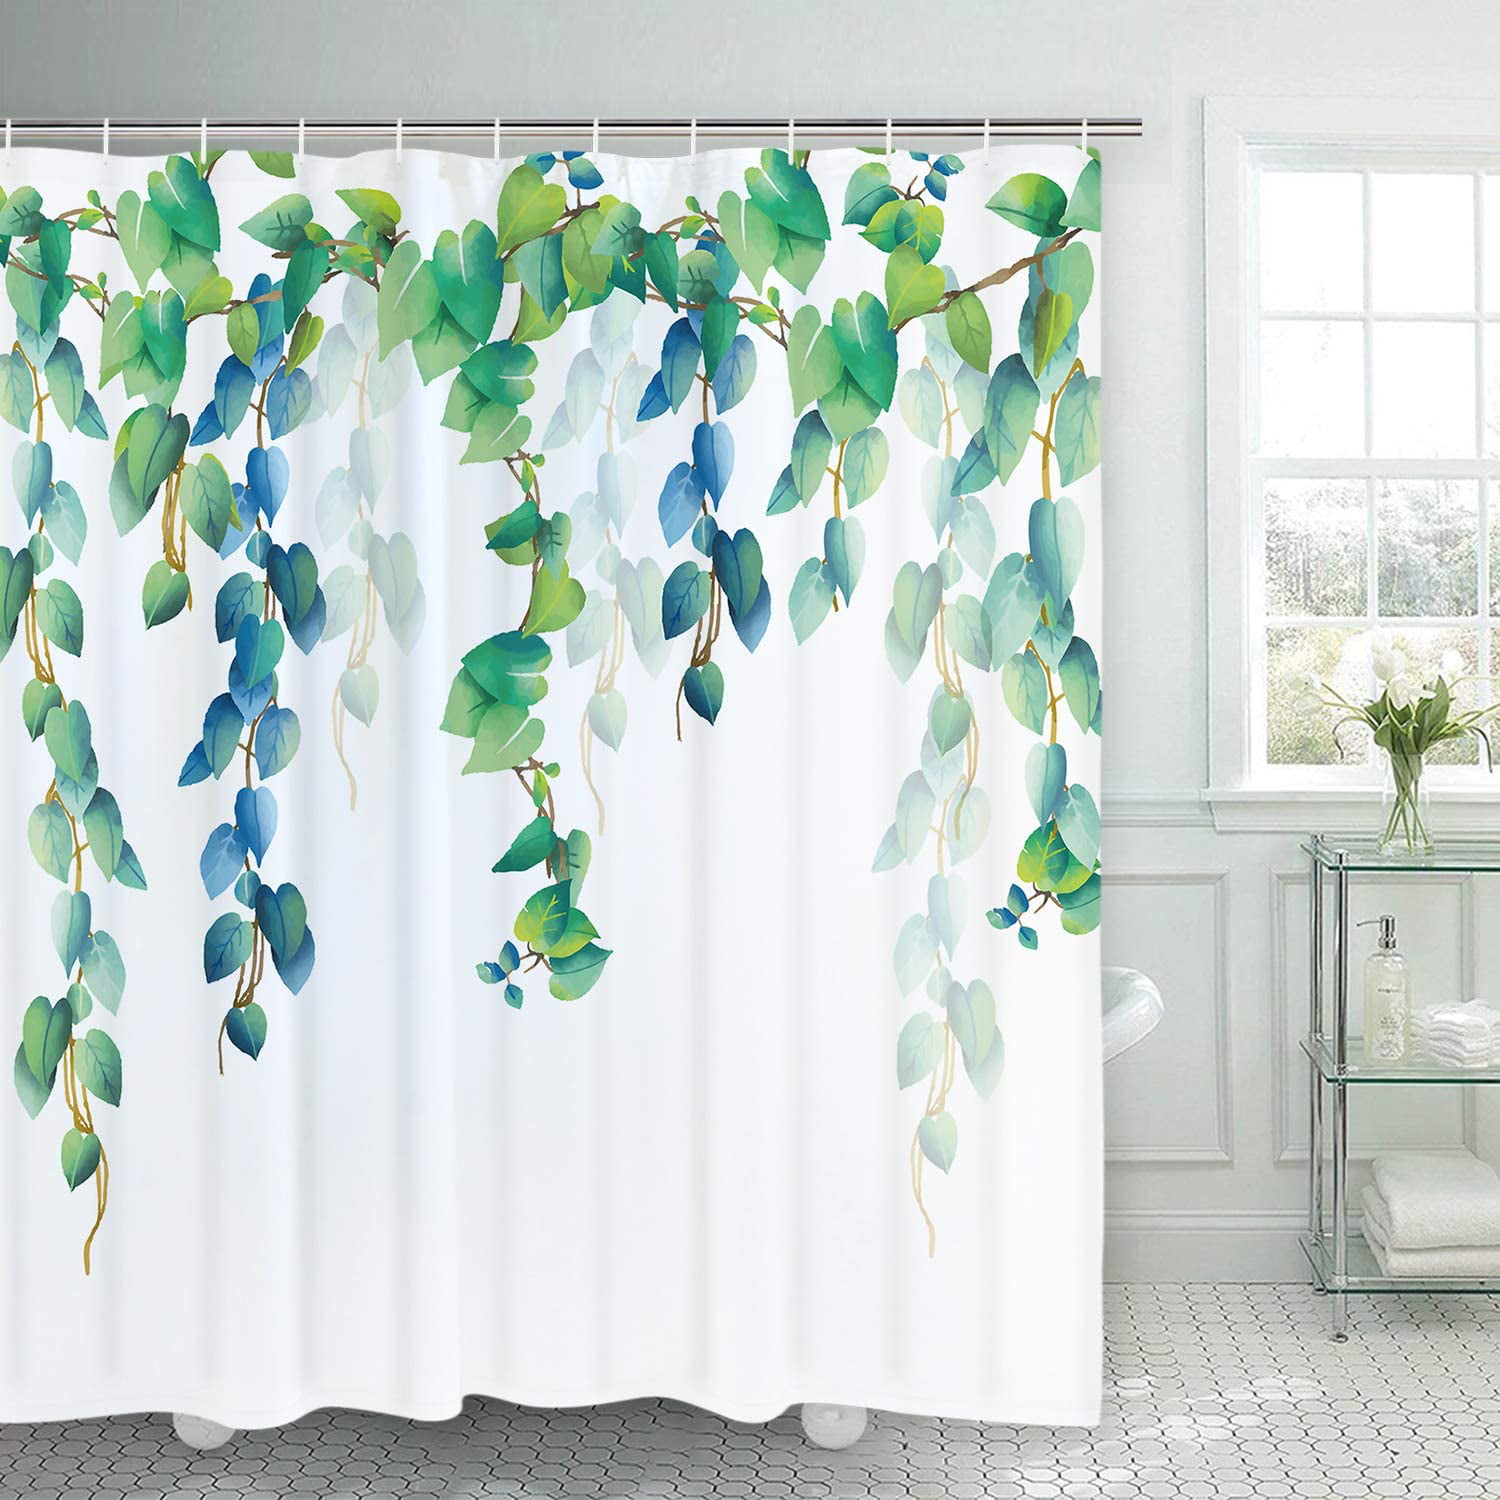 Details about   Black white cannabis leaf Shower Curtain Bathroom Decor Fabric & 12hooks 71" 